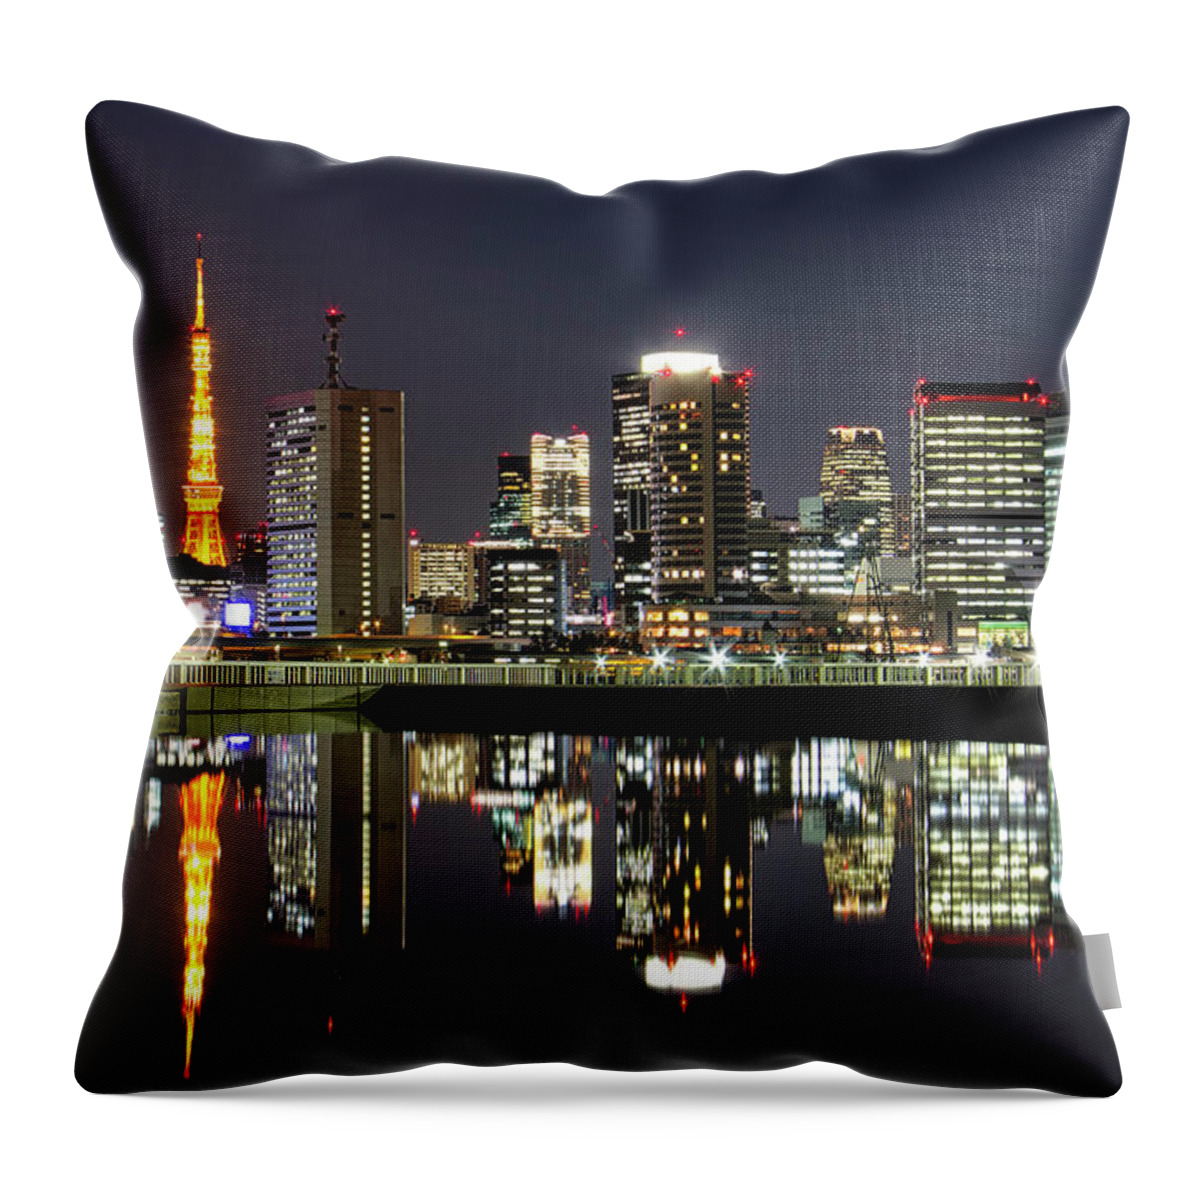 Tokyo Tower Throw Pillow featuring the photograph Reflection City Of Tokyo by I Kadek Wismalana